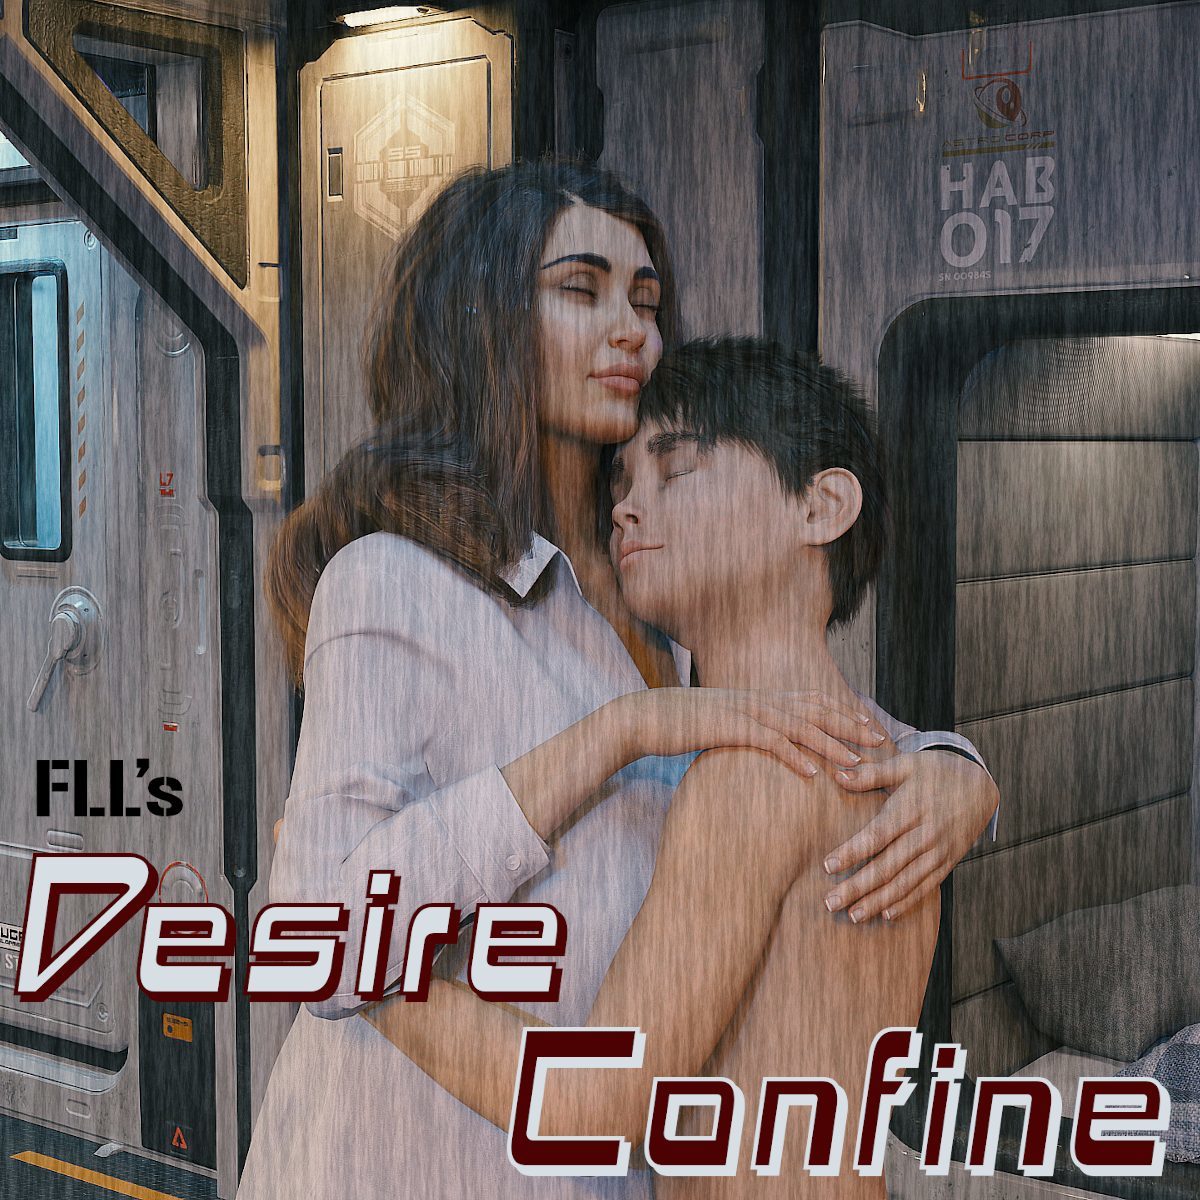 [Comix] Desire Confine (FLL, f95zone) [3DCG, Voyeurism, Exhibitionism, Incest, MILF, Big ass, Big tits, Stripping] [CBZ] [eng]